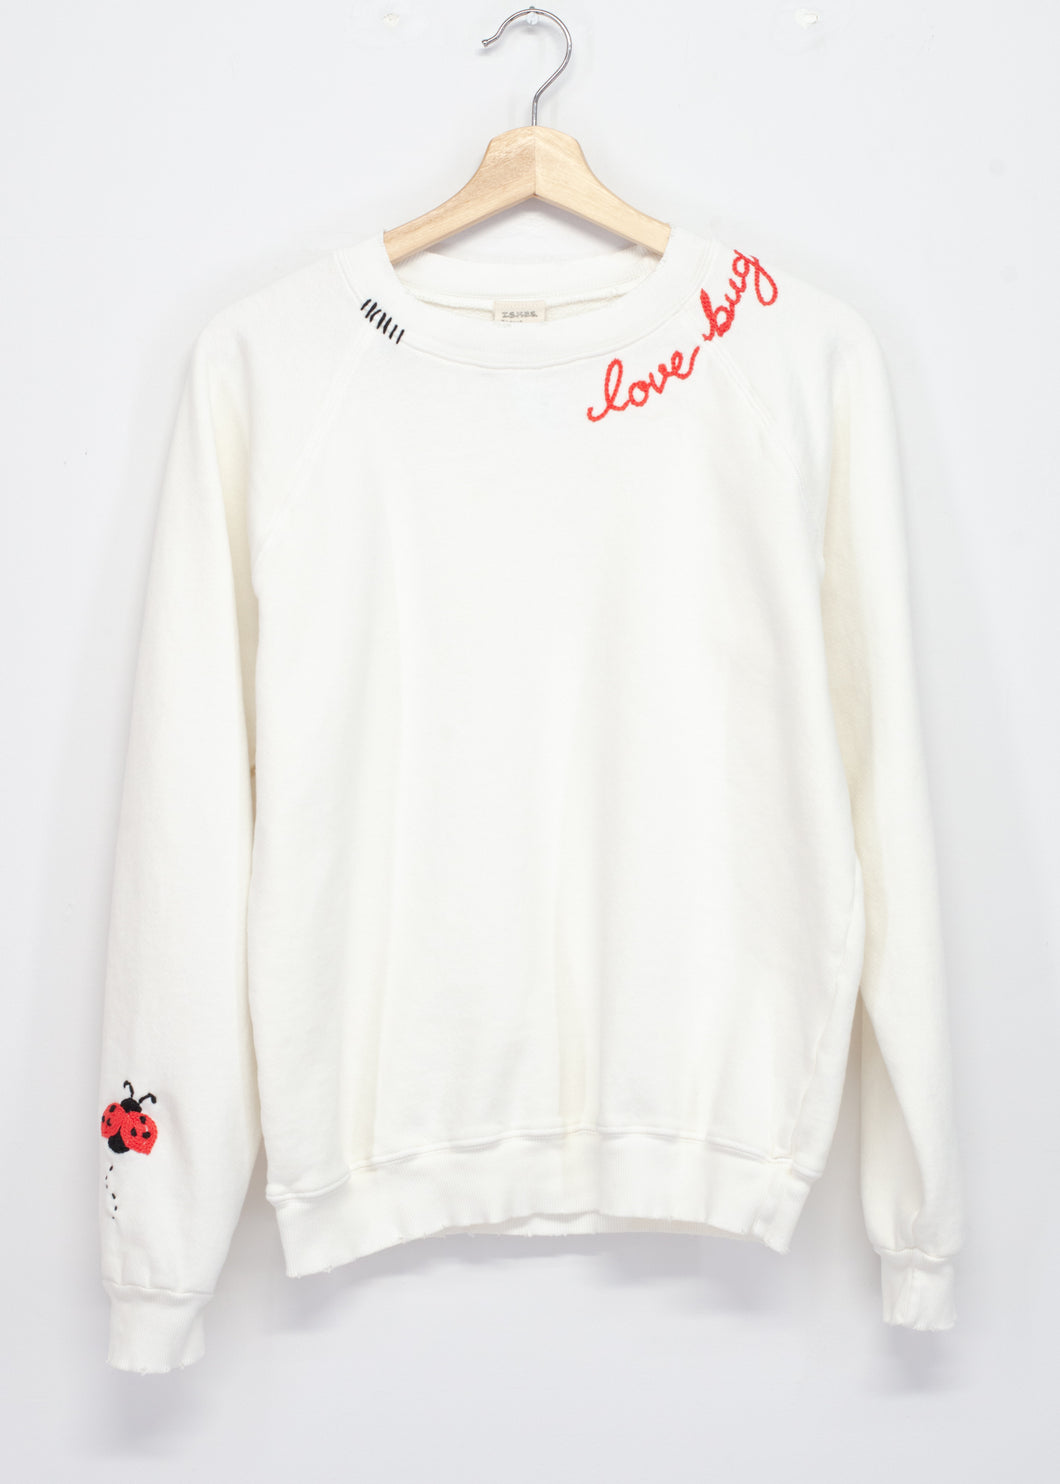 lovebug Sweatshirt (3 Colors)